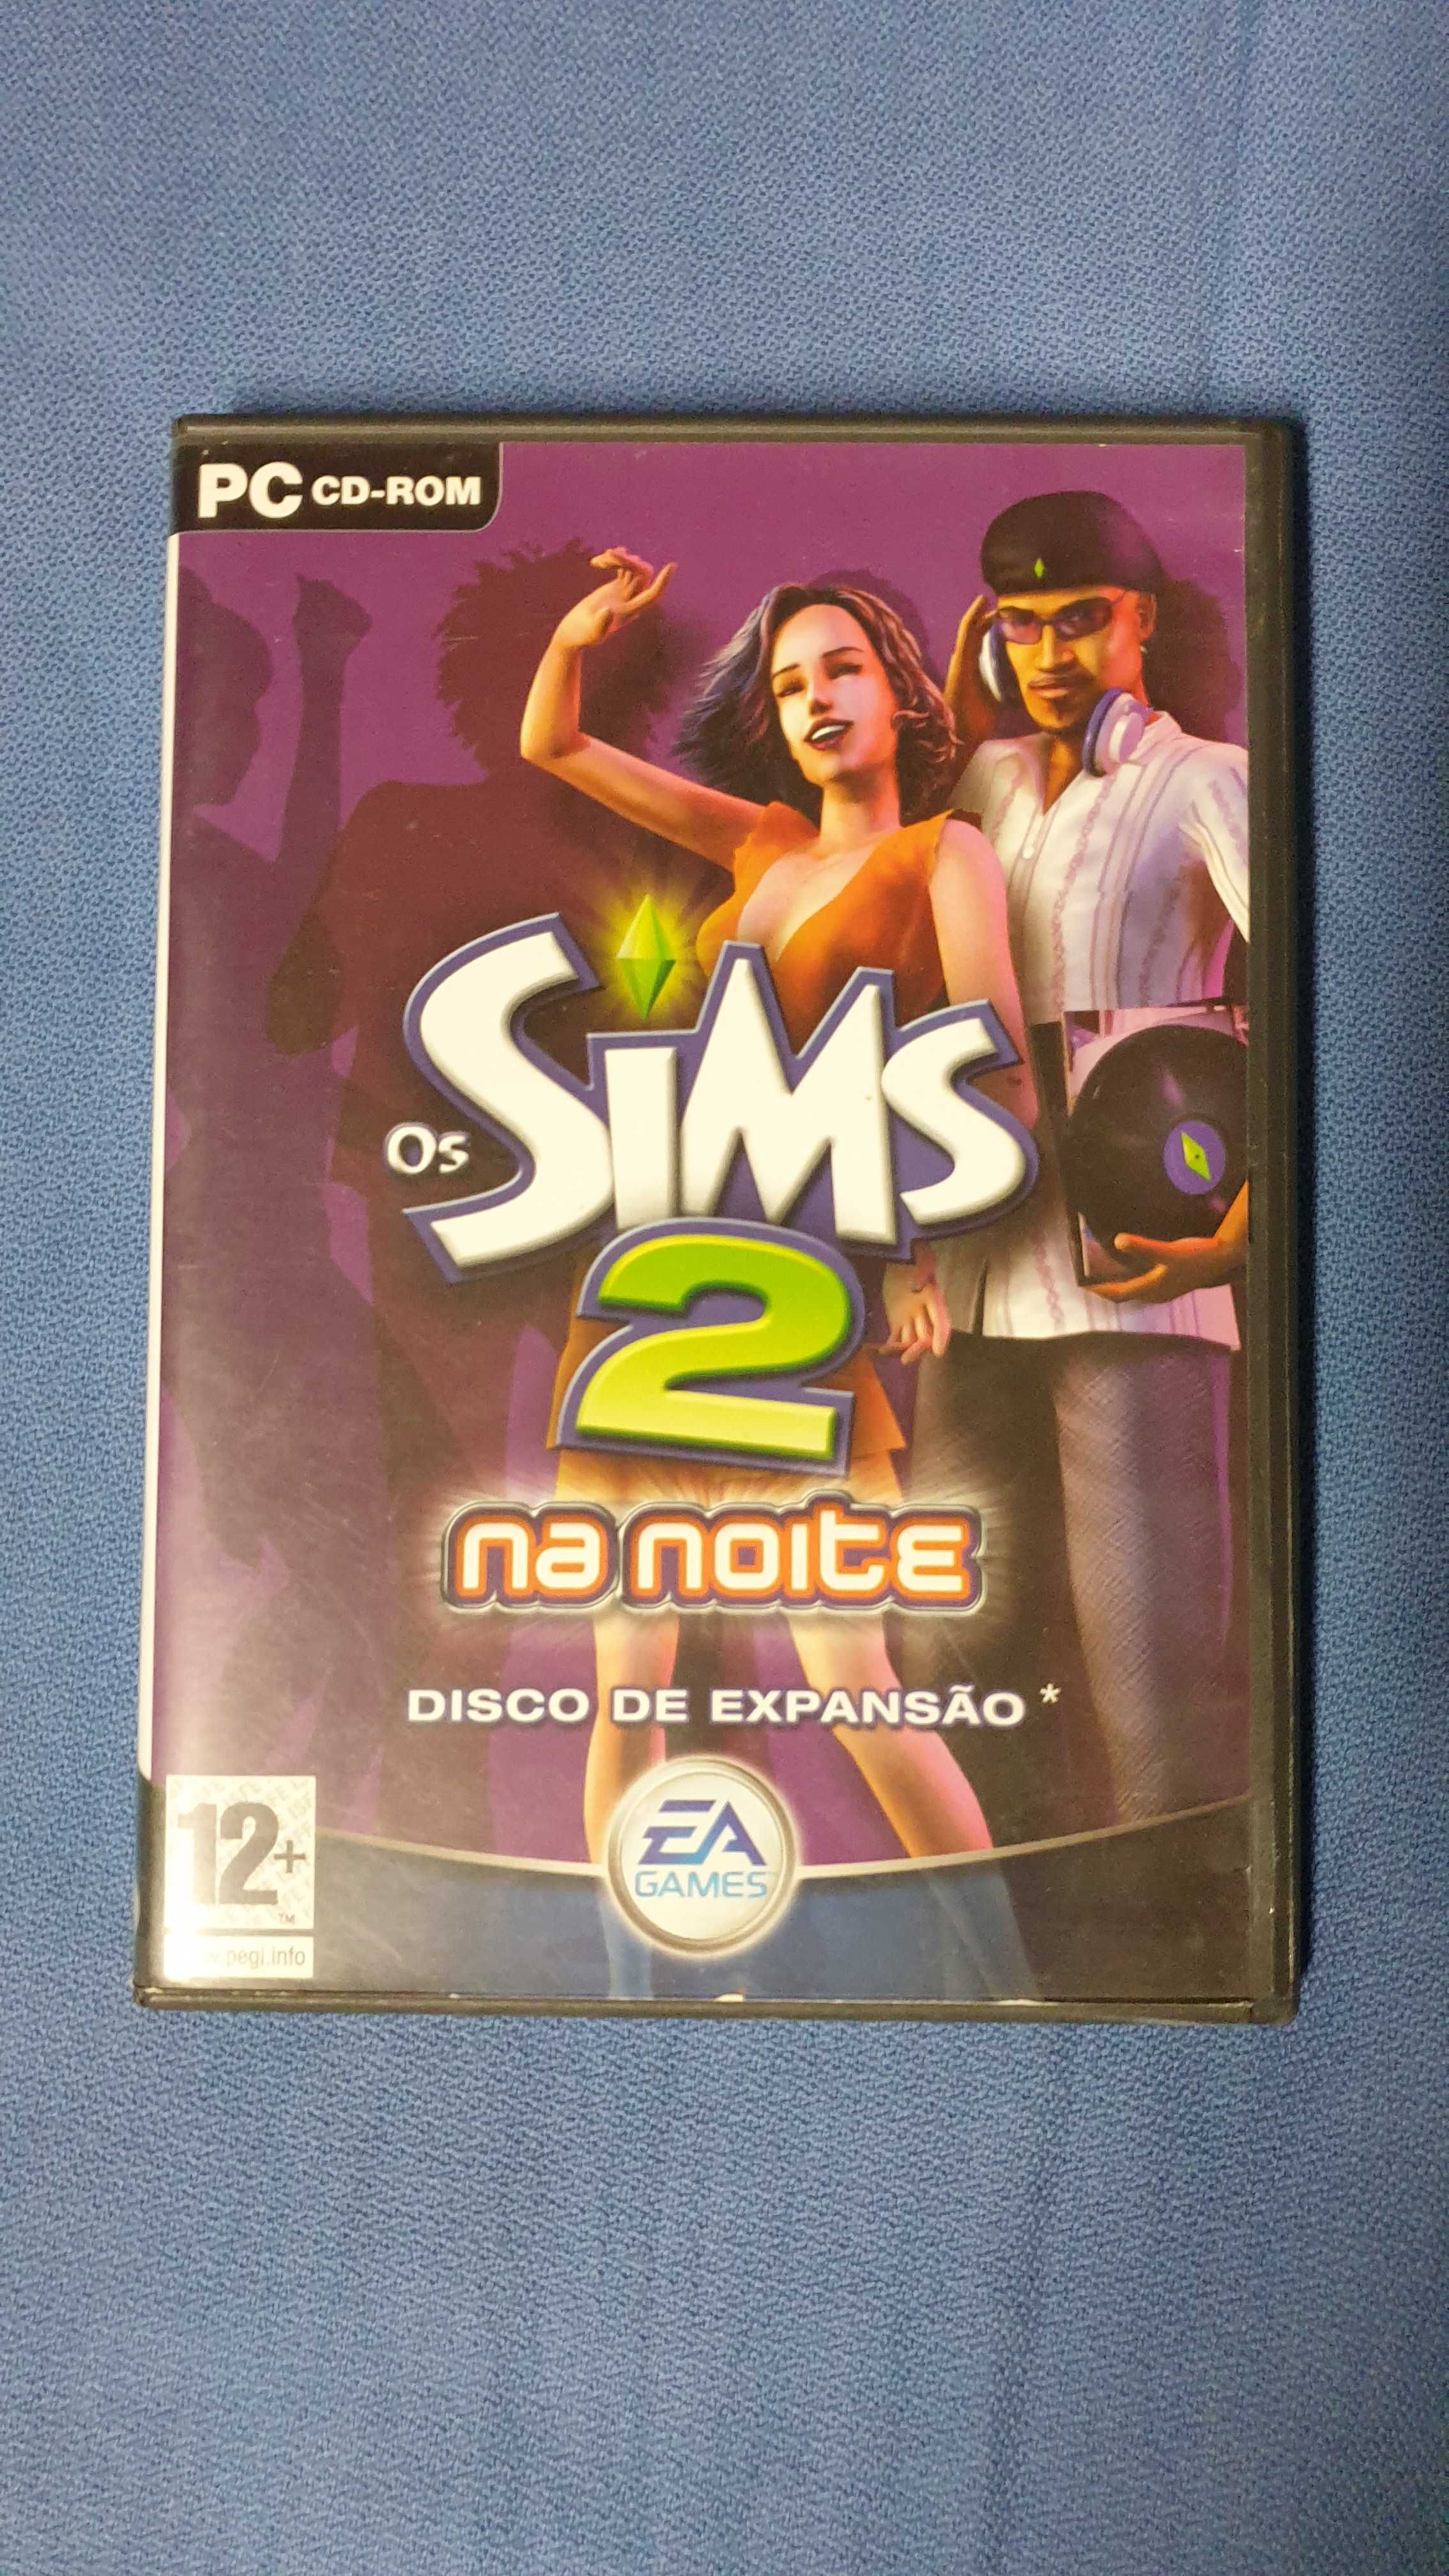 Jogo The Sims 2 na noite, para PC